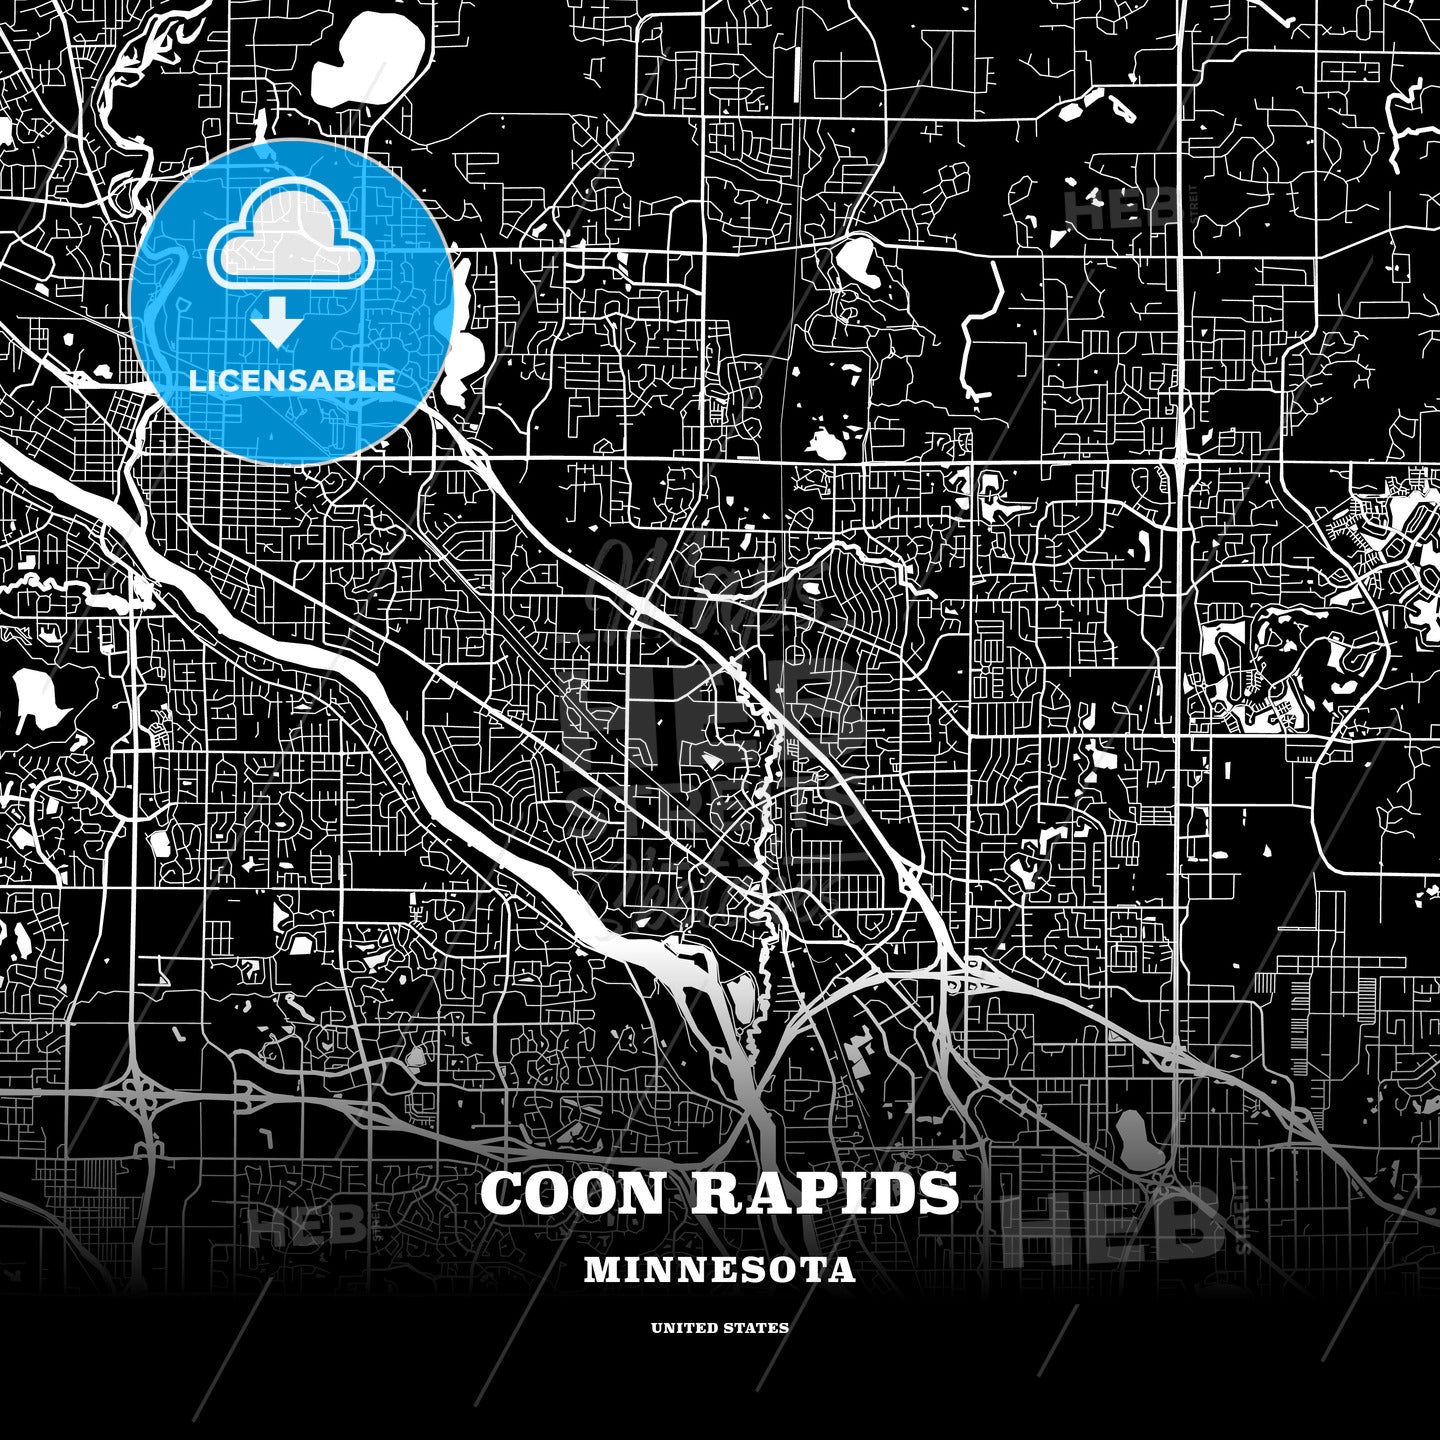 Coon Rapids, Minnesota, USA map